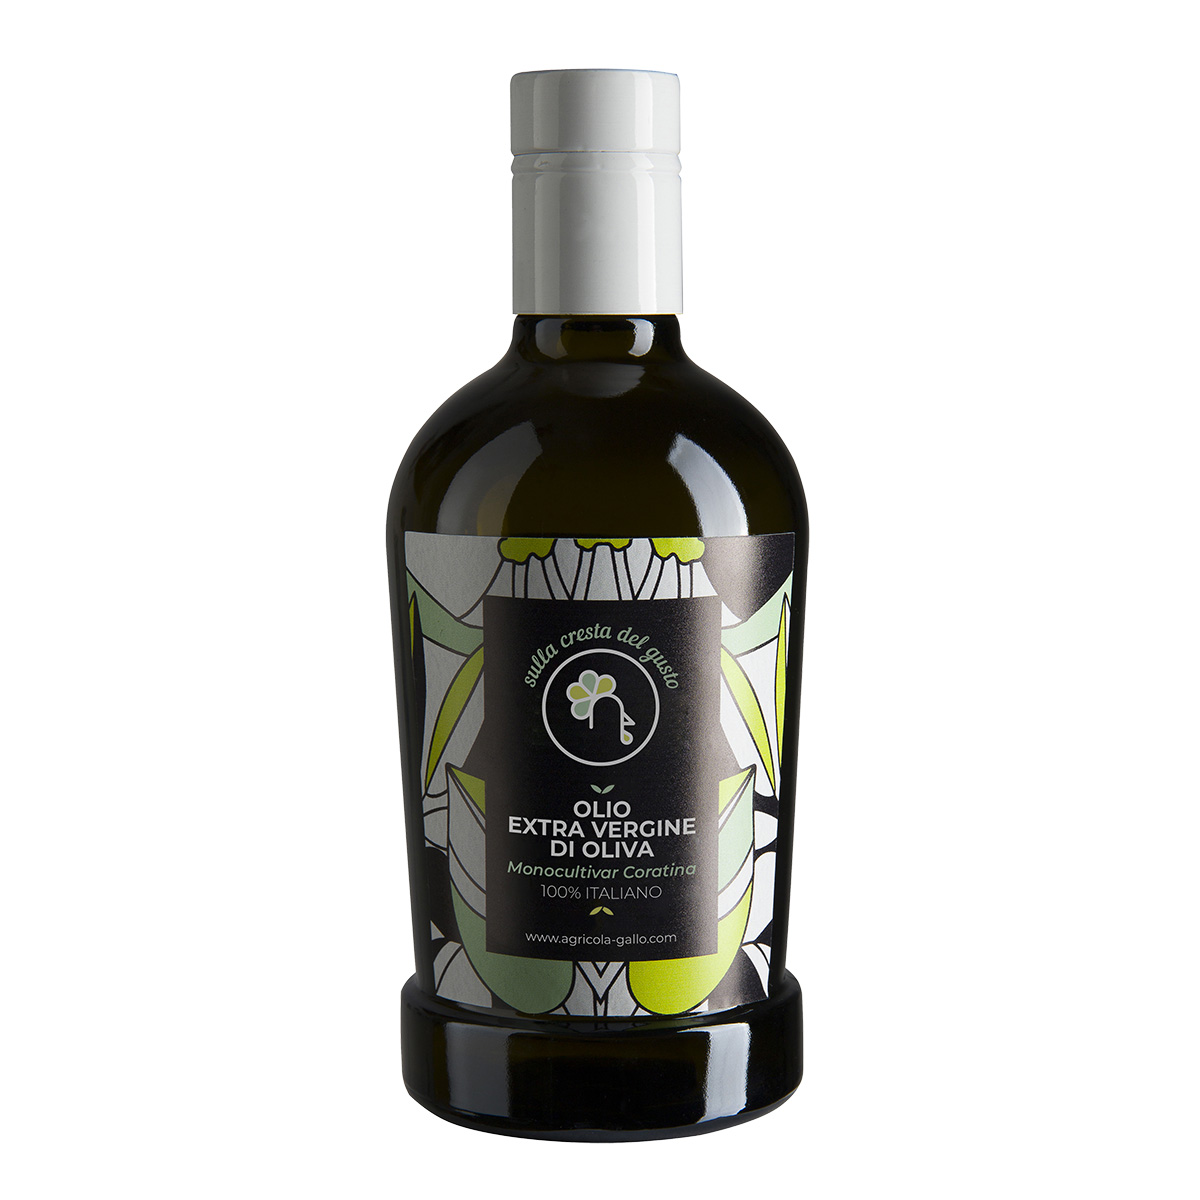 Extra virgin olive oil 0.5 lt